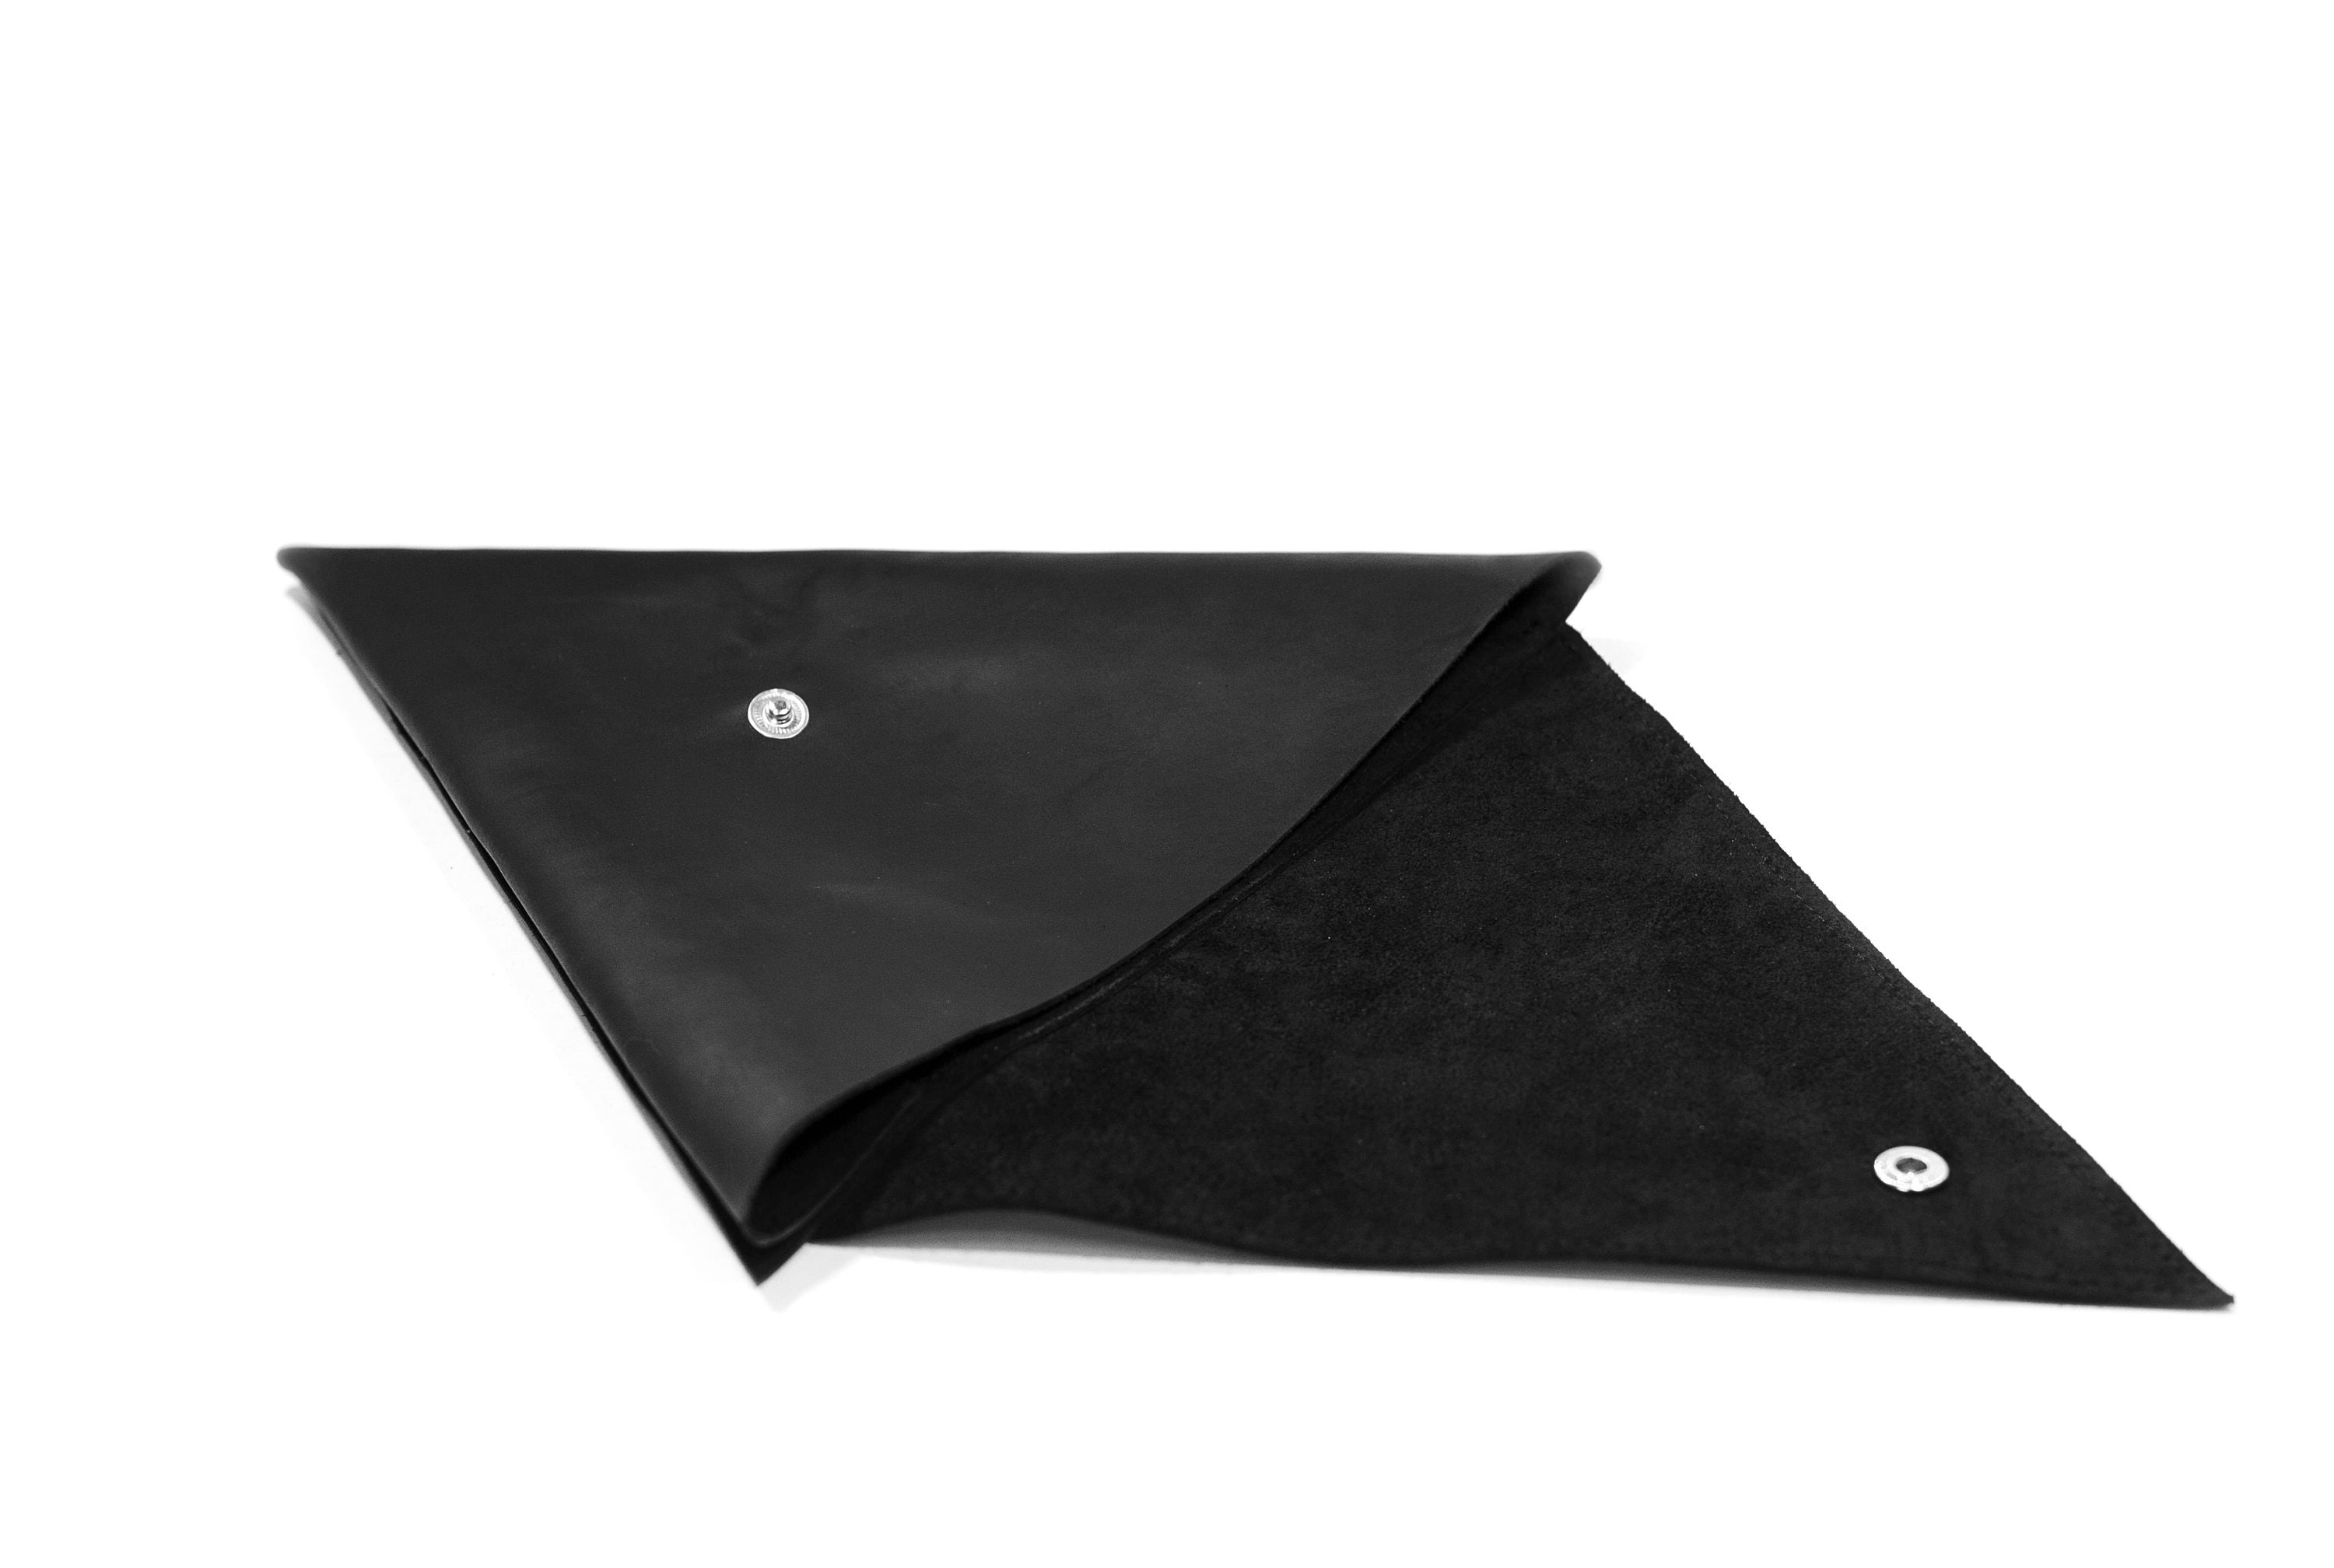 Triangular leather bag Red crossbody bag Stylish unique | Etsy